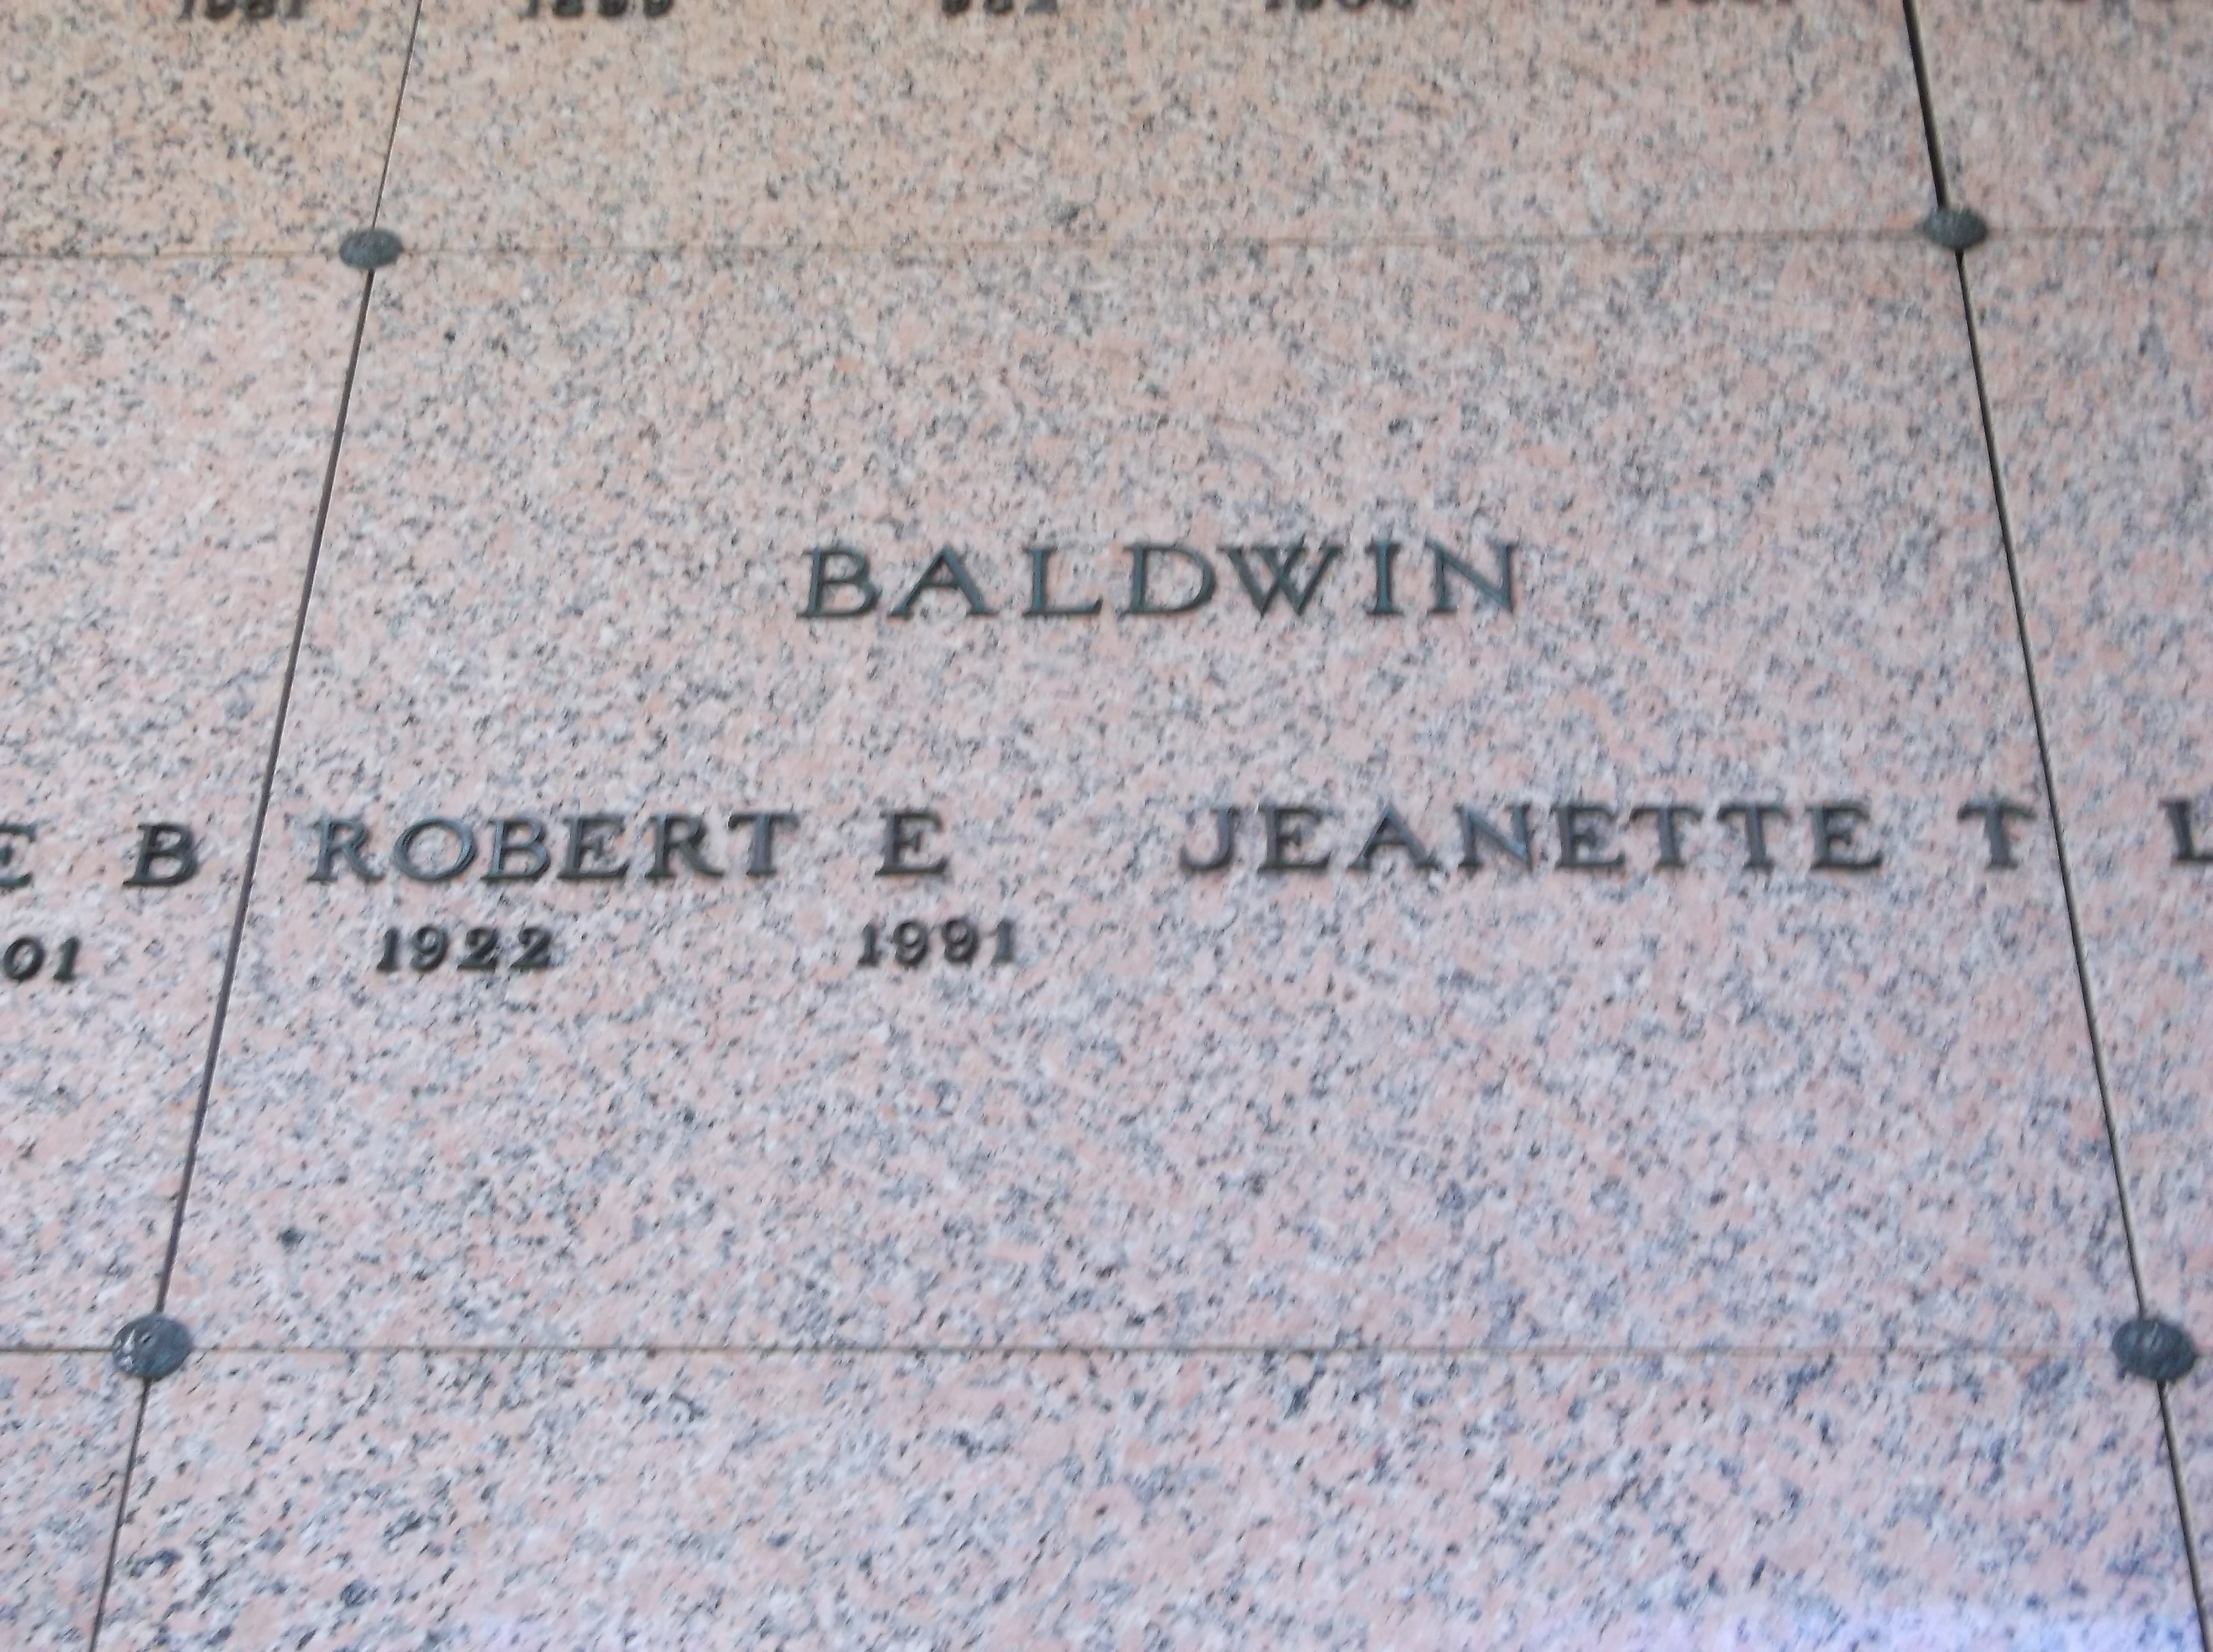 Robert E Baldwin